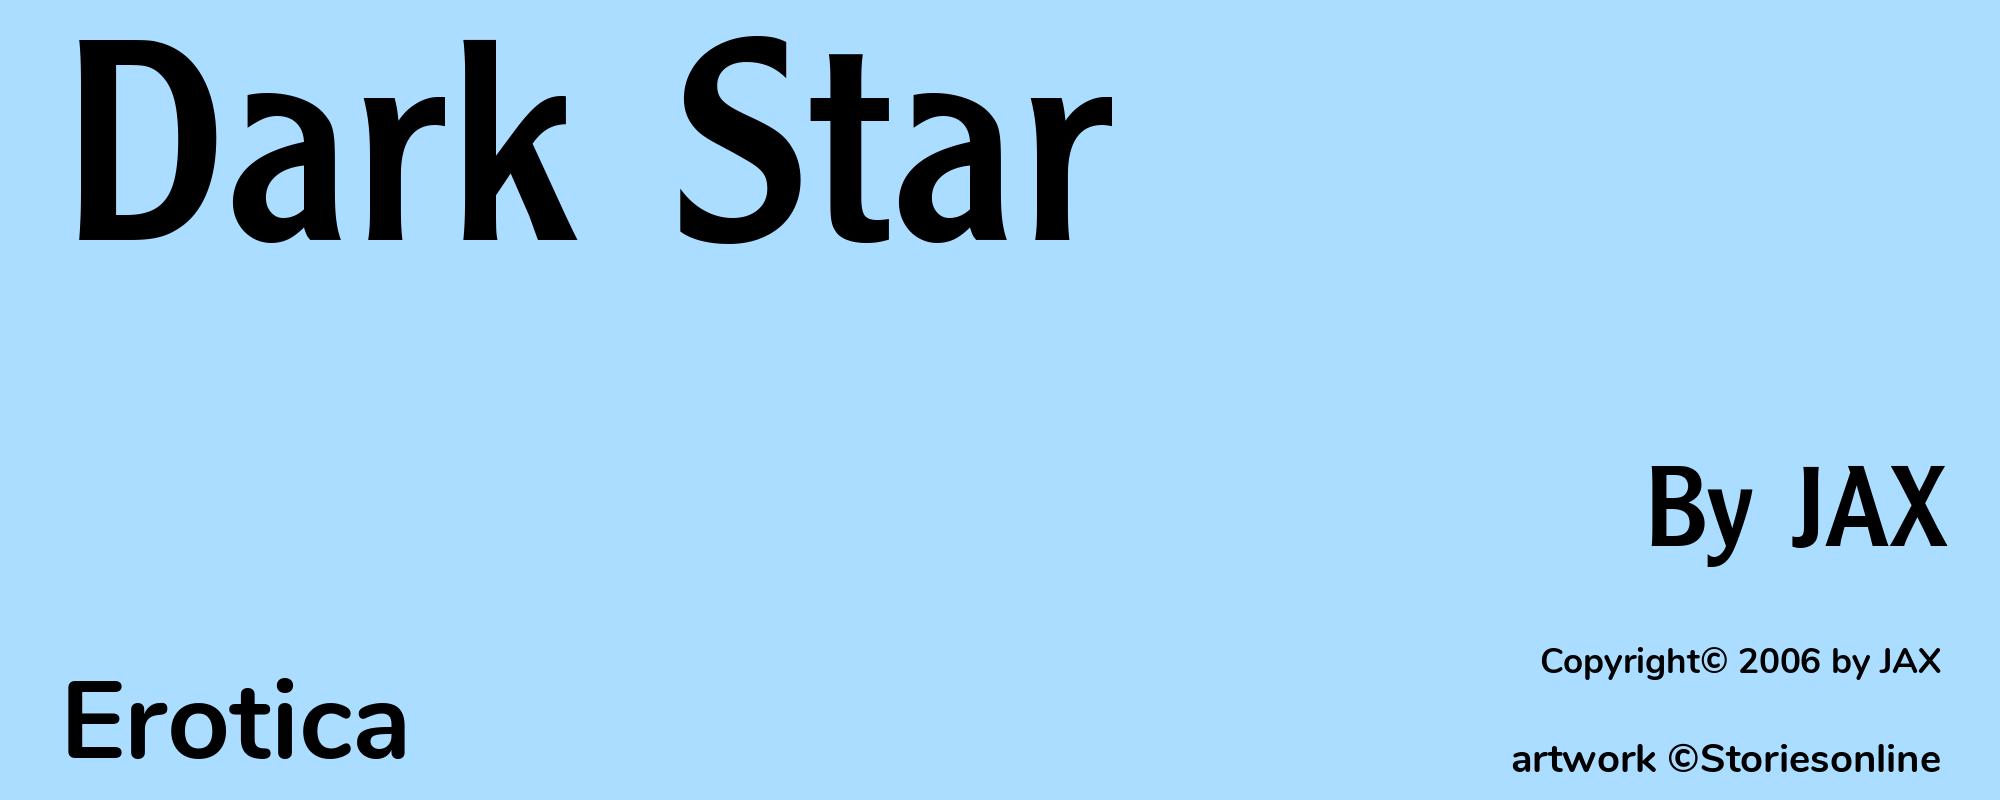 Dark Star - Cover